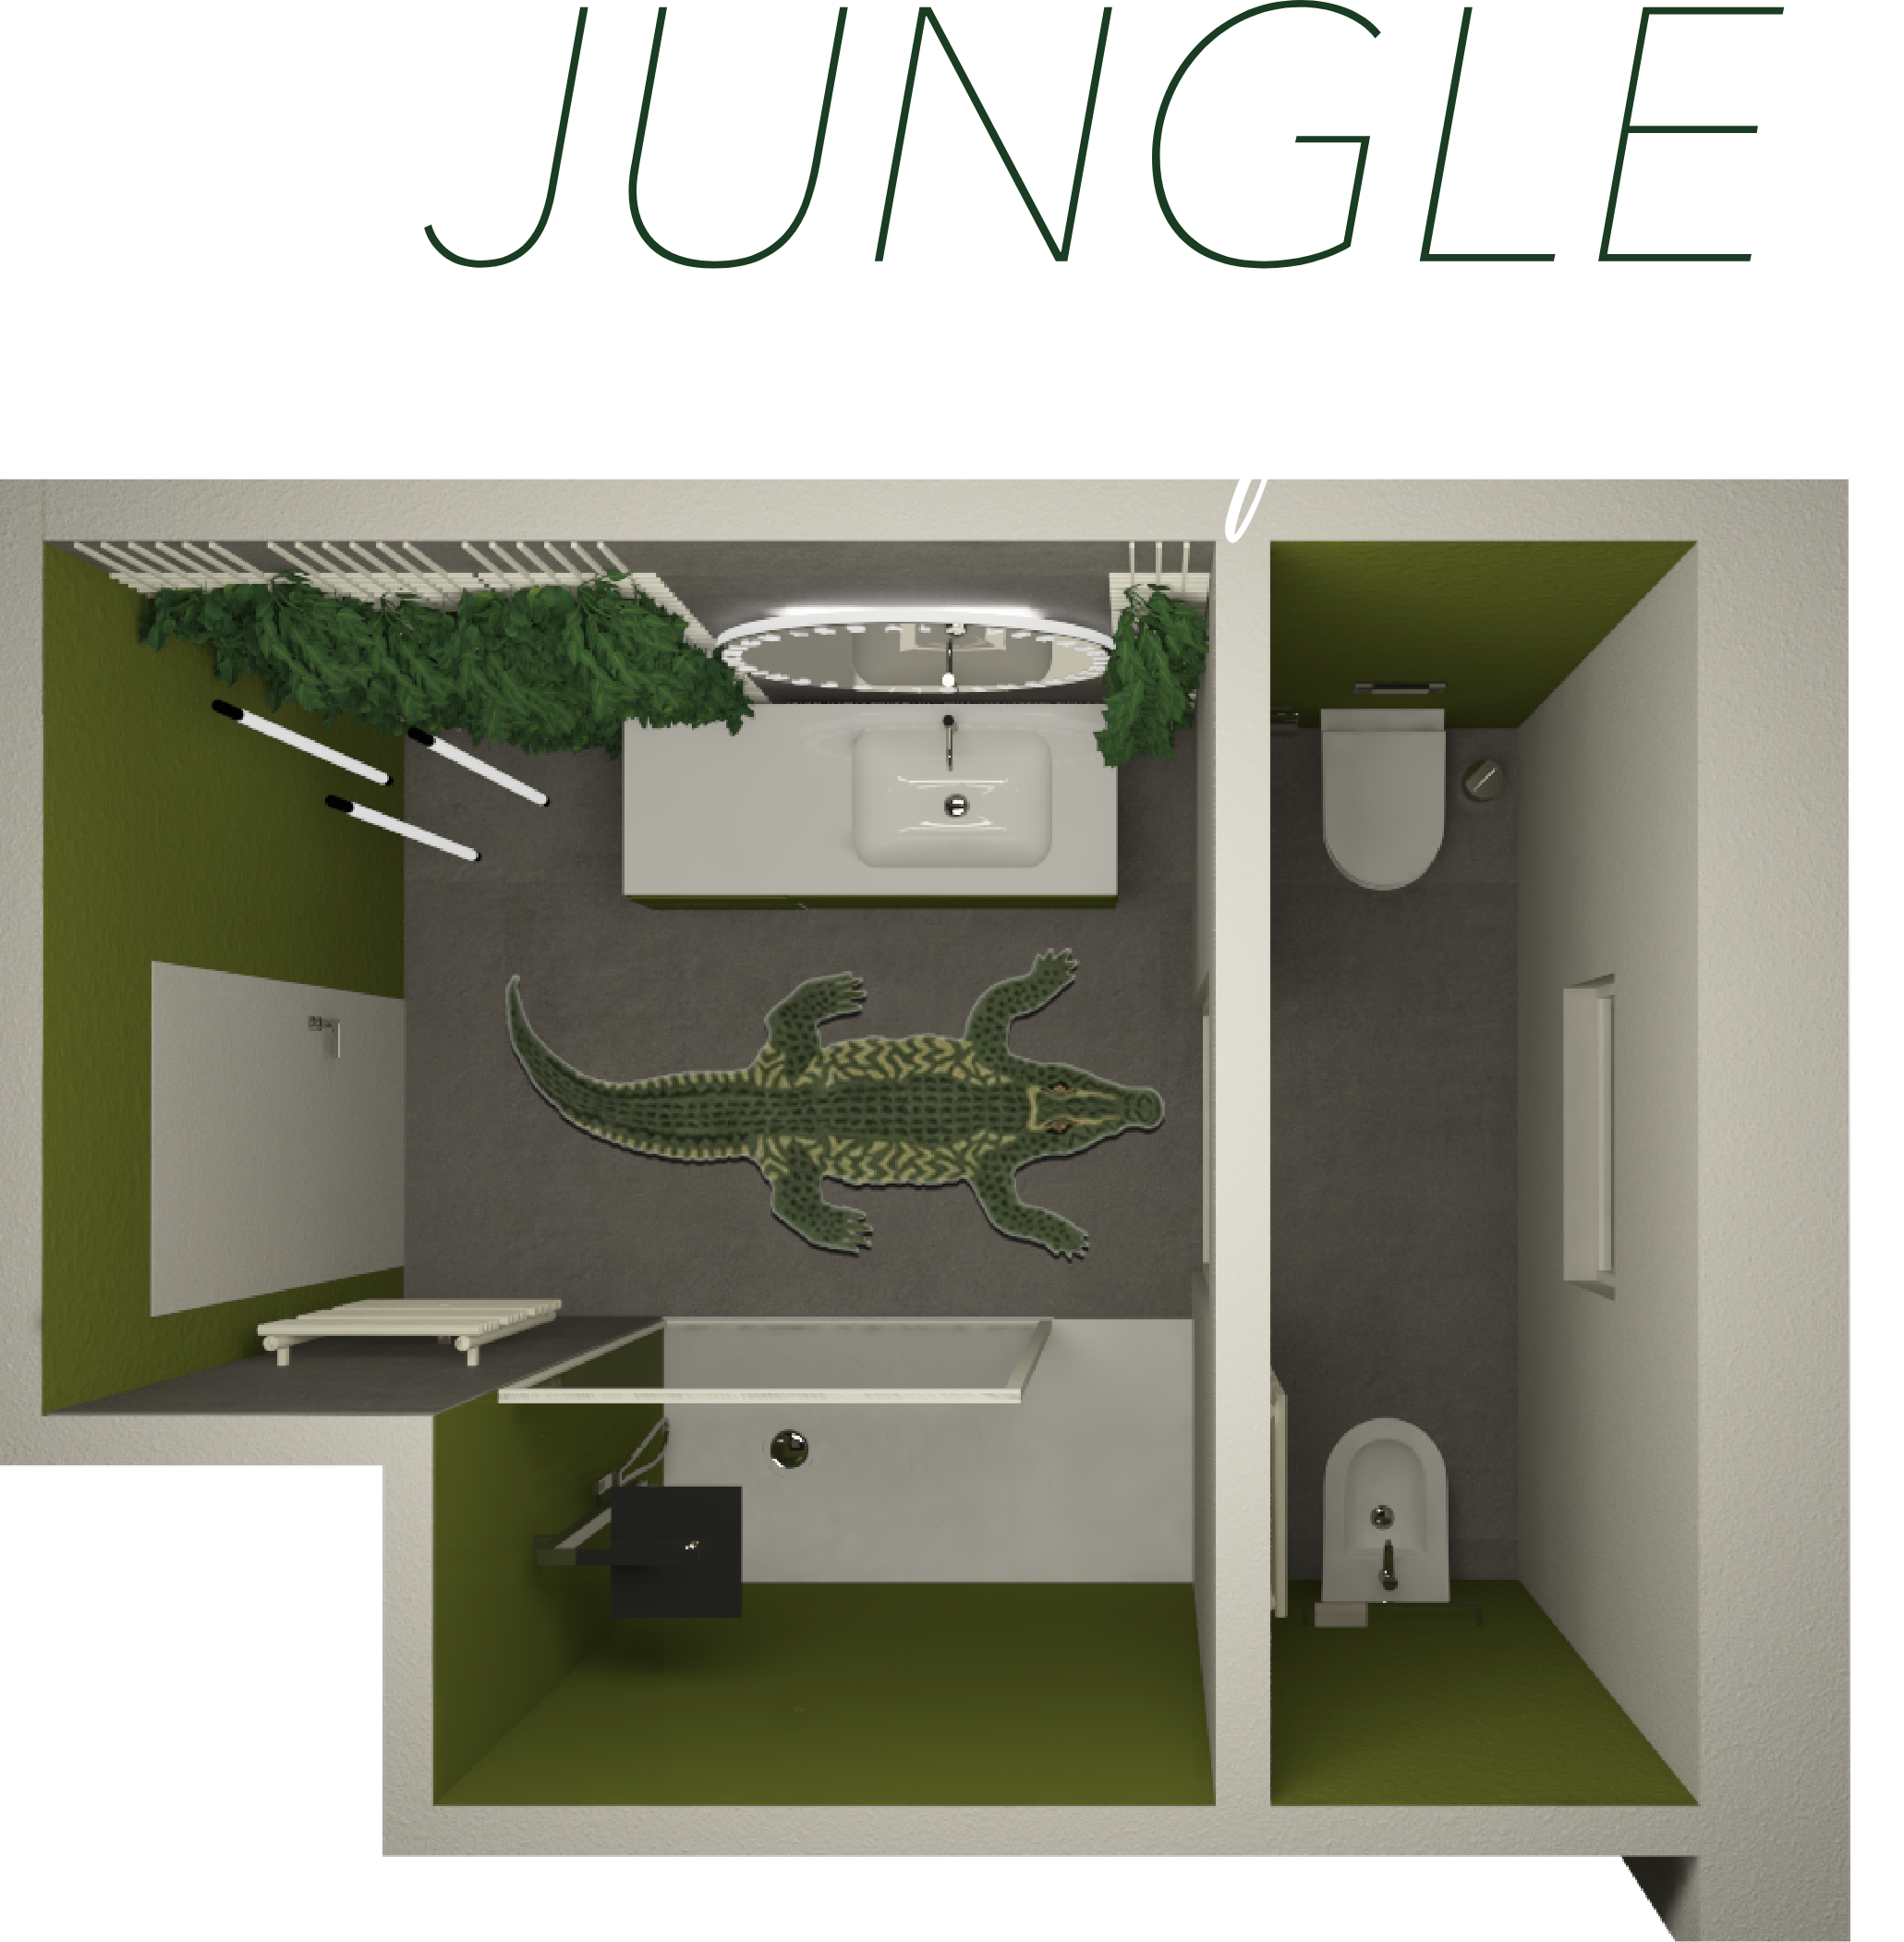 Jungle Green